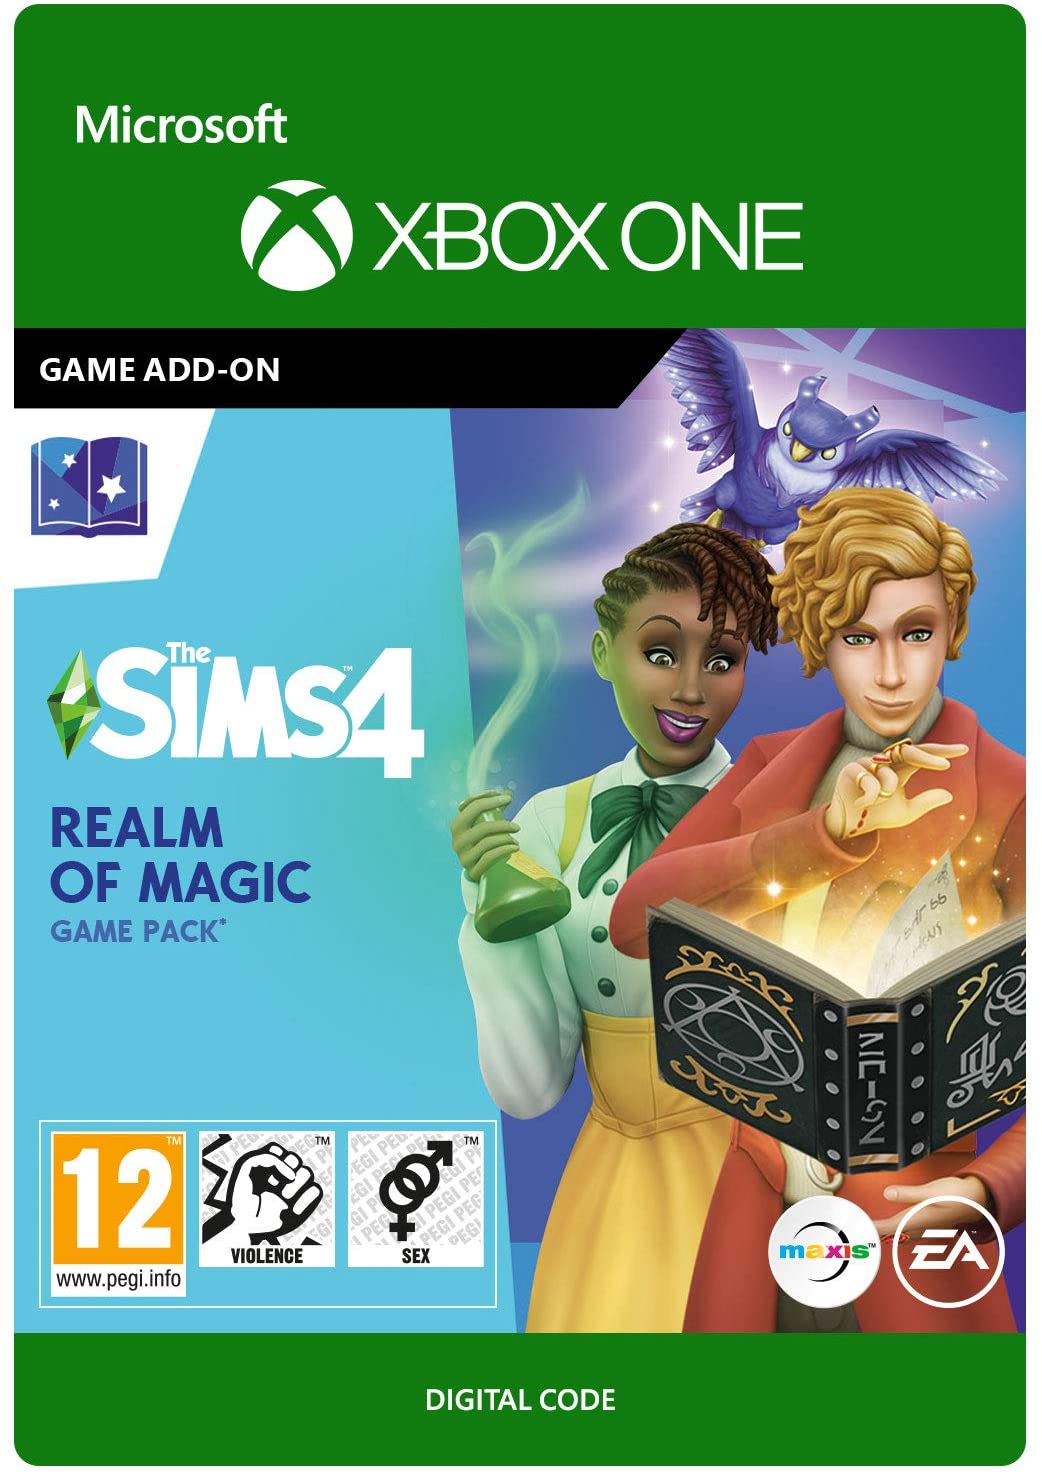 The Sims 4: Realm of Magic Digital Download Key (Xbox One): United Kingdom - 